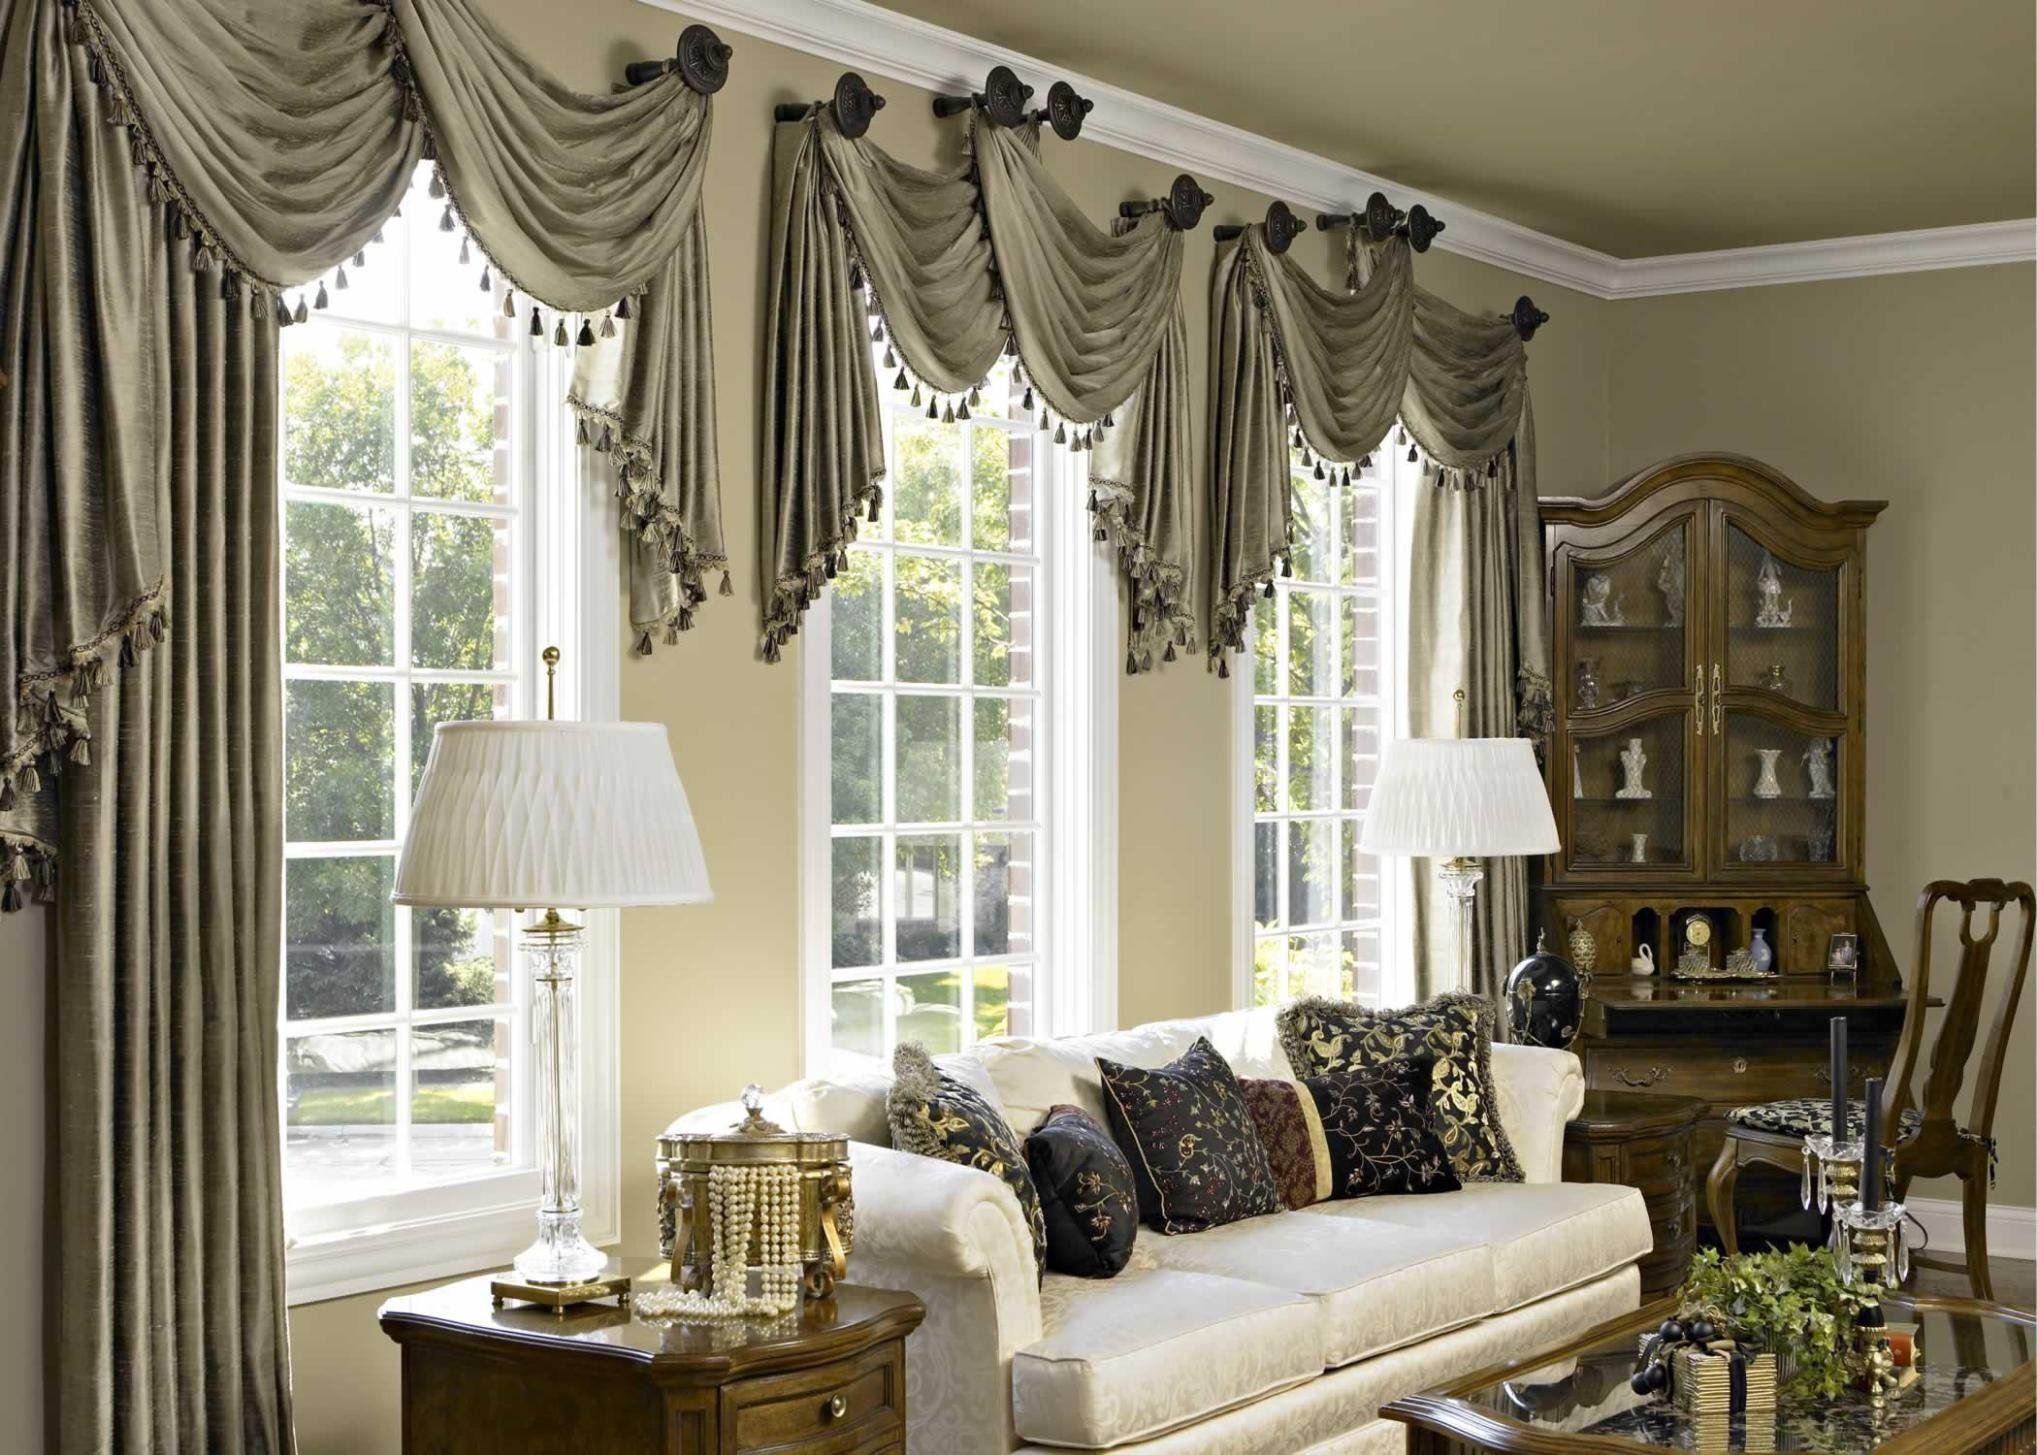 10 Lovely Curtain Ideas For Living Room livingroom curtains ideas for small living room window decorating 2022